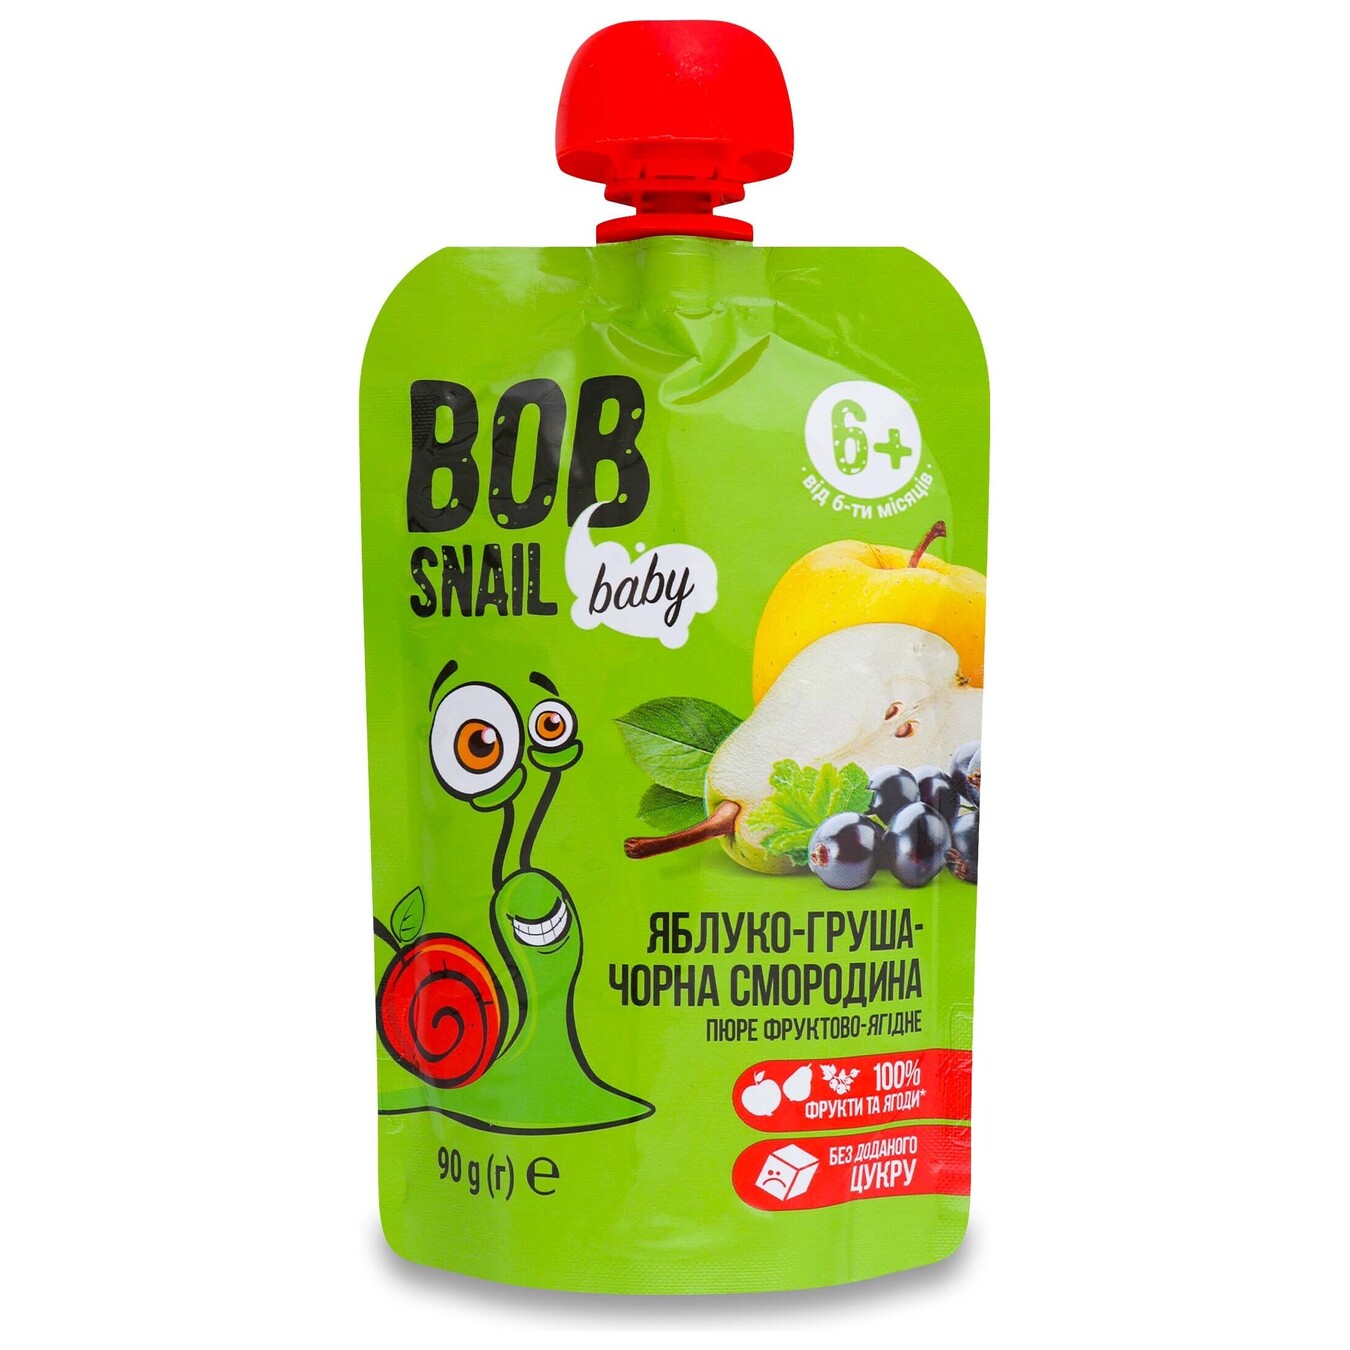 Bob Snail Apple-Pear Fruit puree for children aged 5 months 90 g